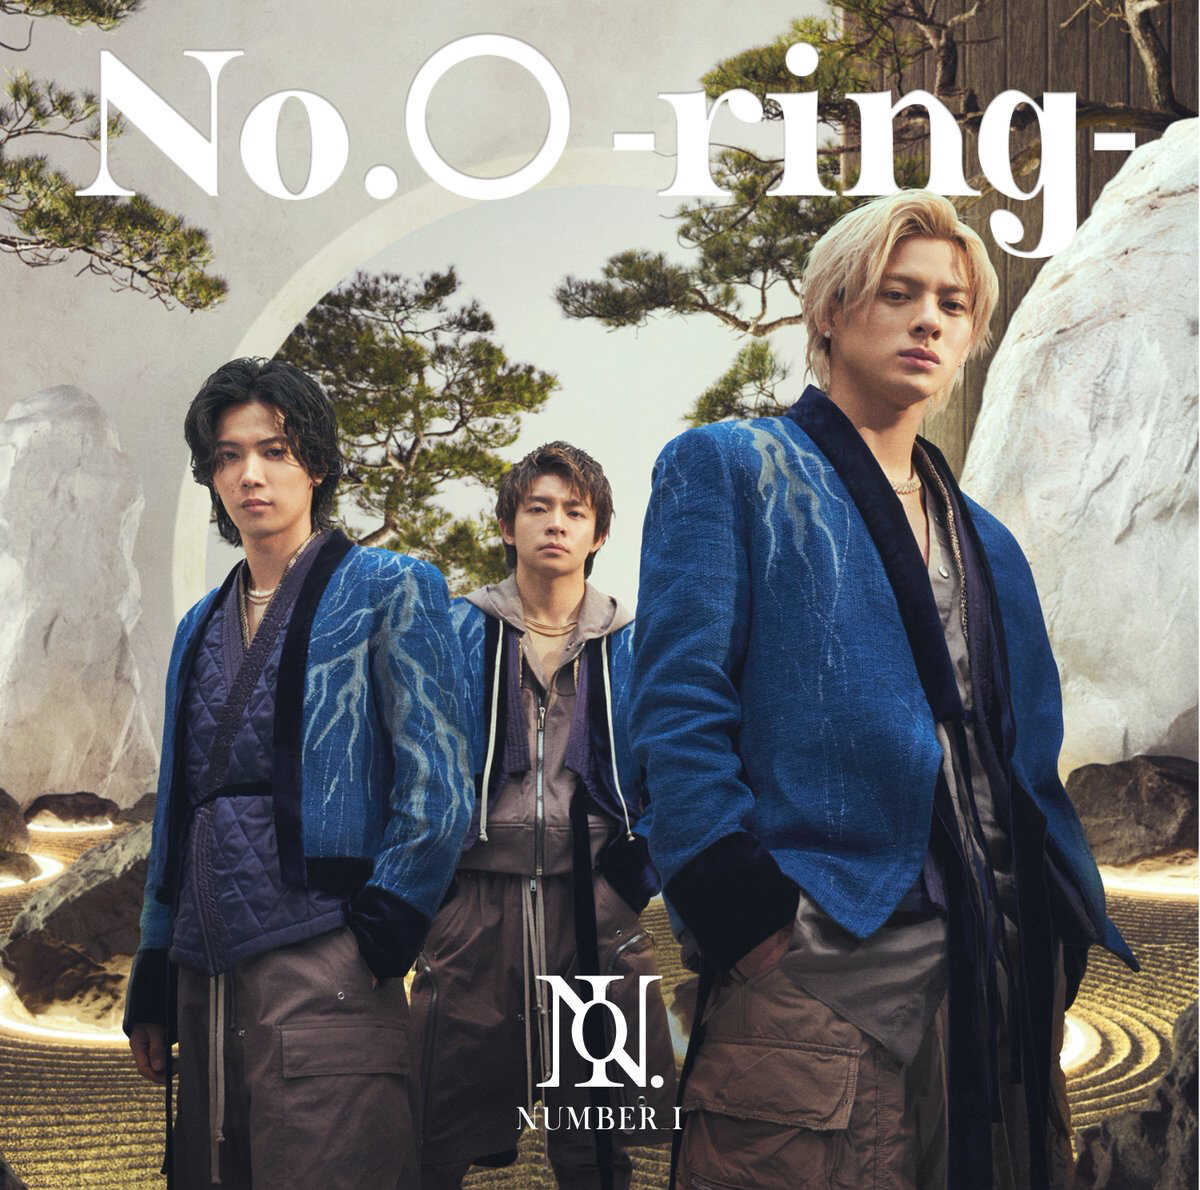 Number_i 5月27日発売のミニアルバム「No.O -ring-」のジャケット写真公開